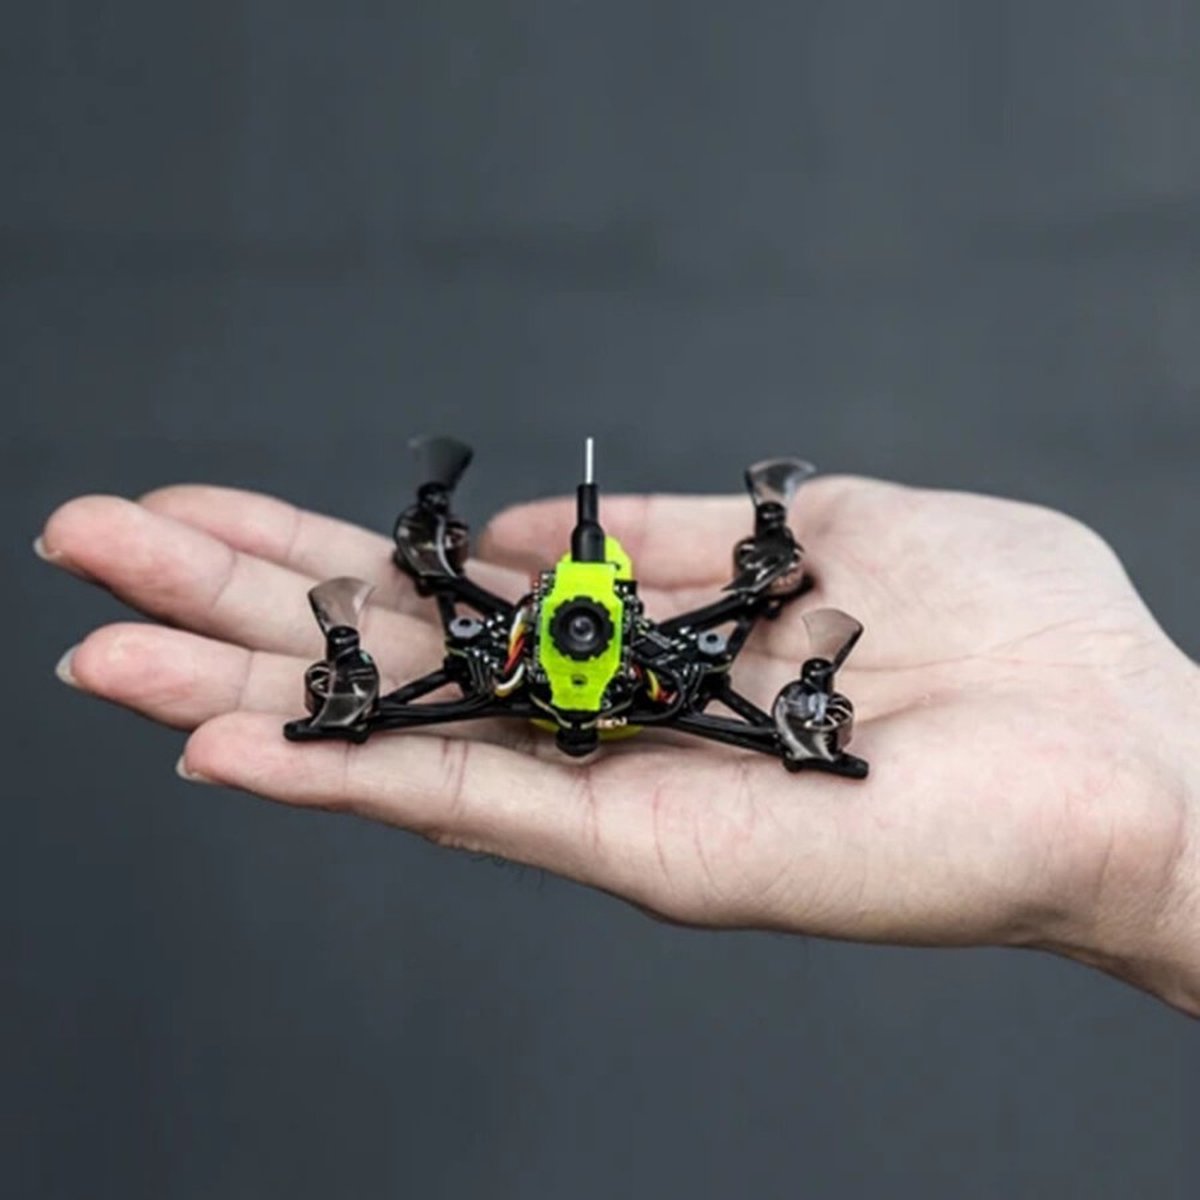 Nano firefly drone